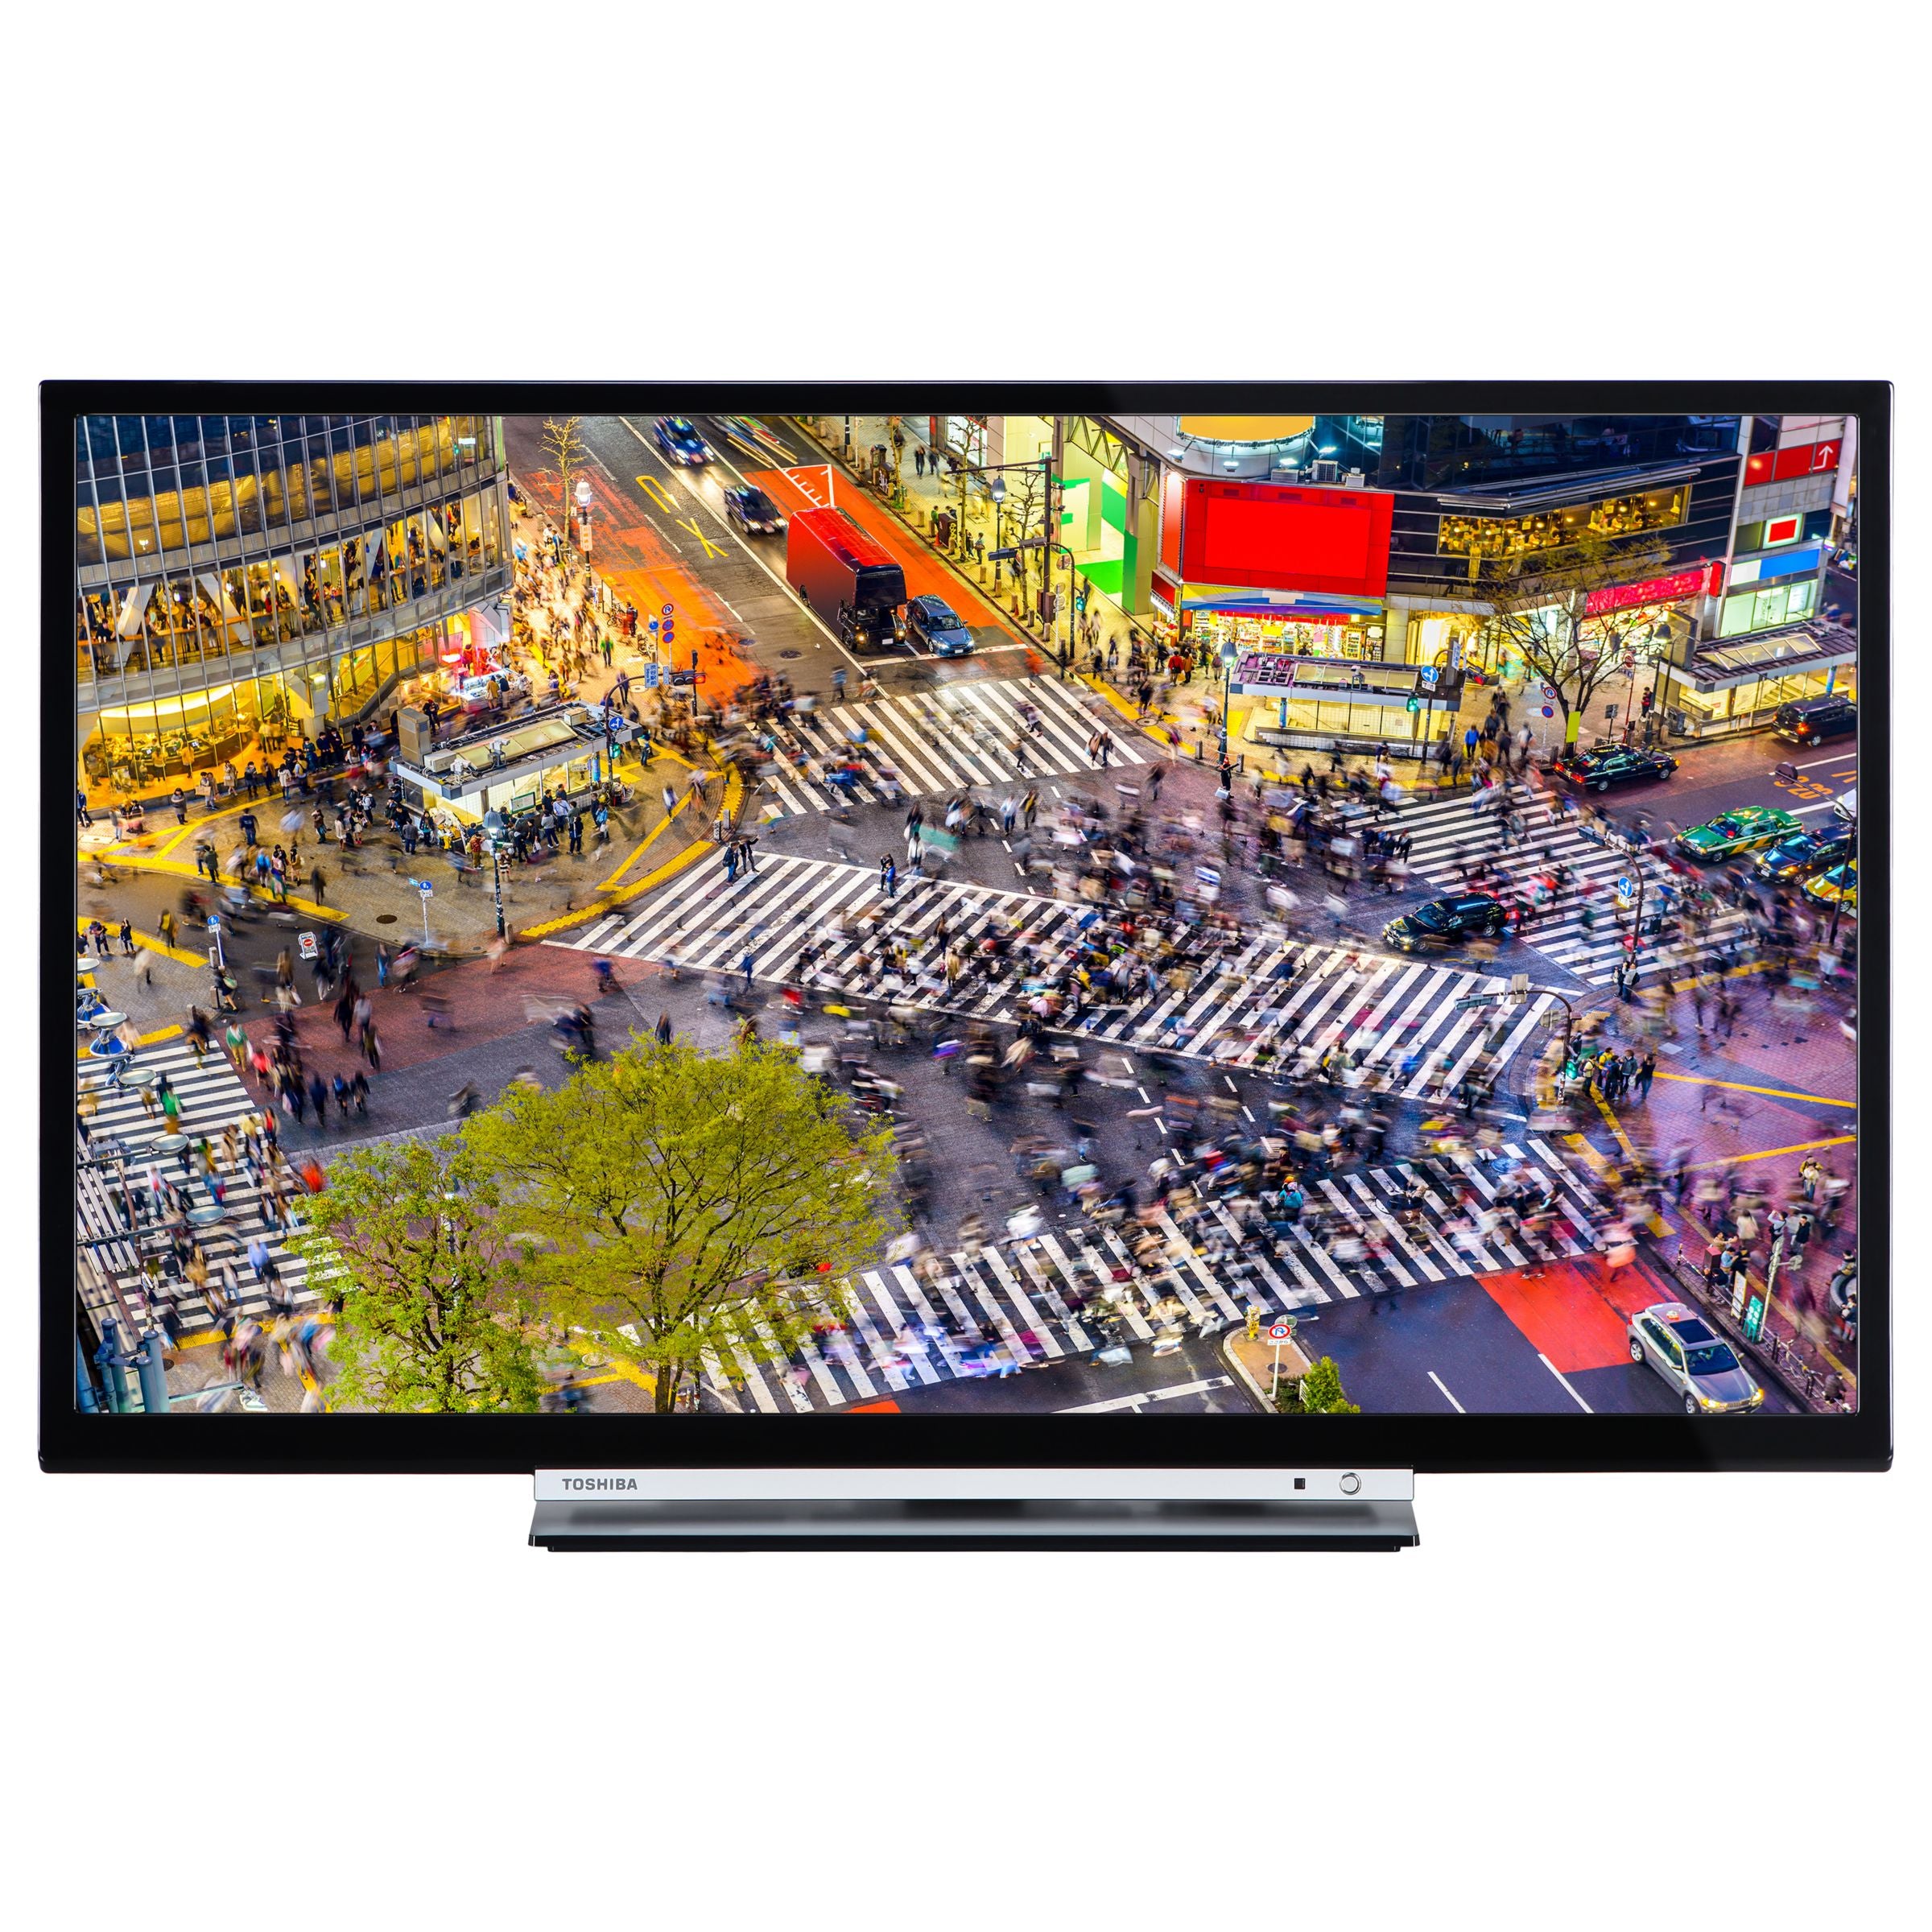 Toshiba 24D3753DB LED HD Ready 720p Smart TV